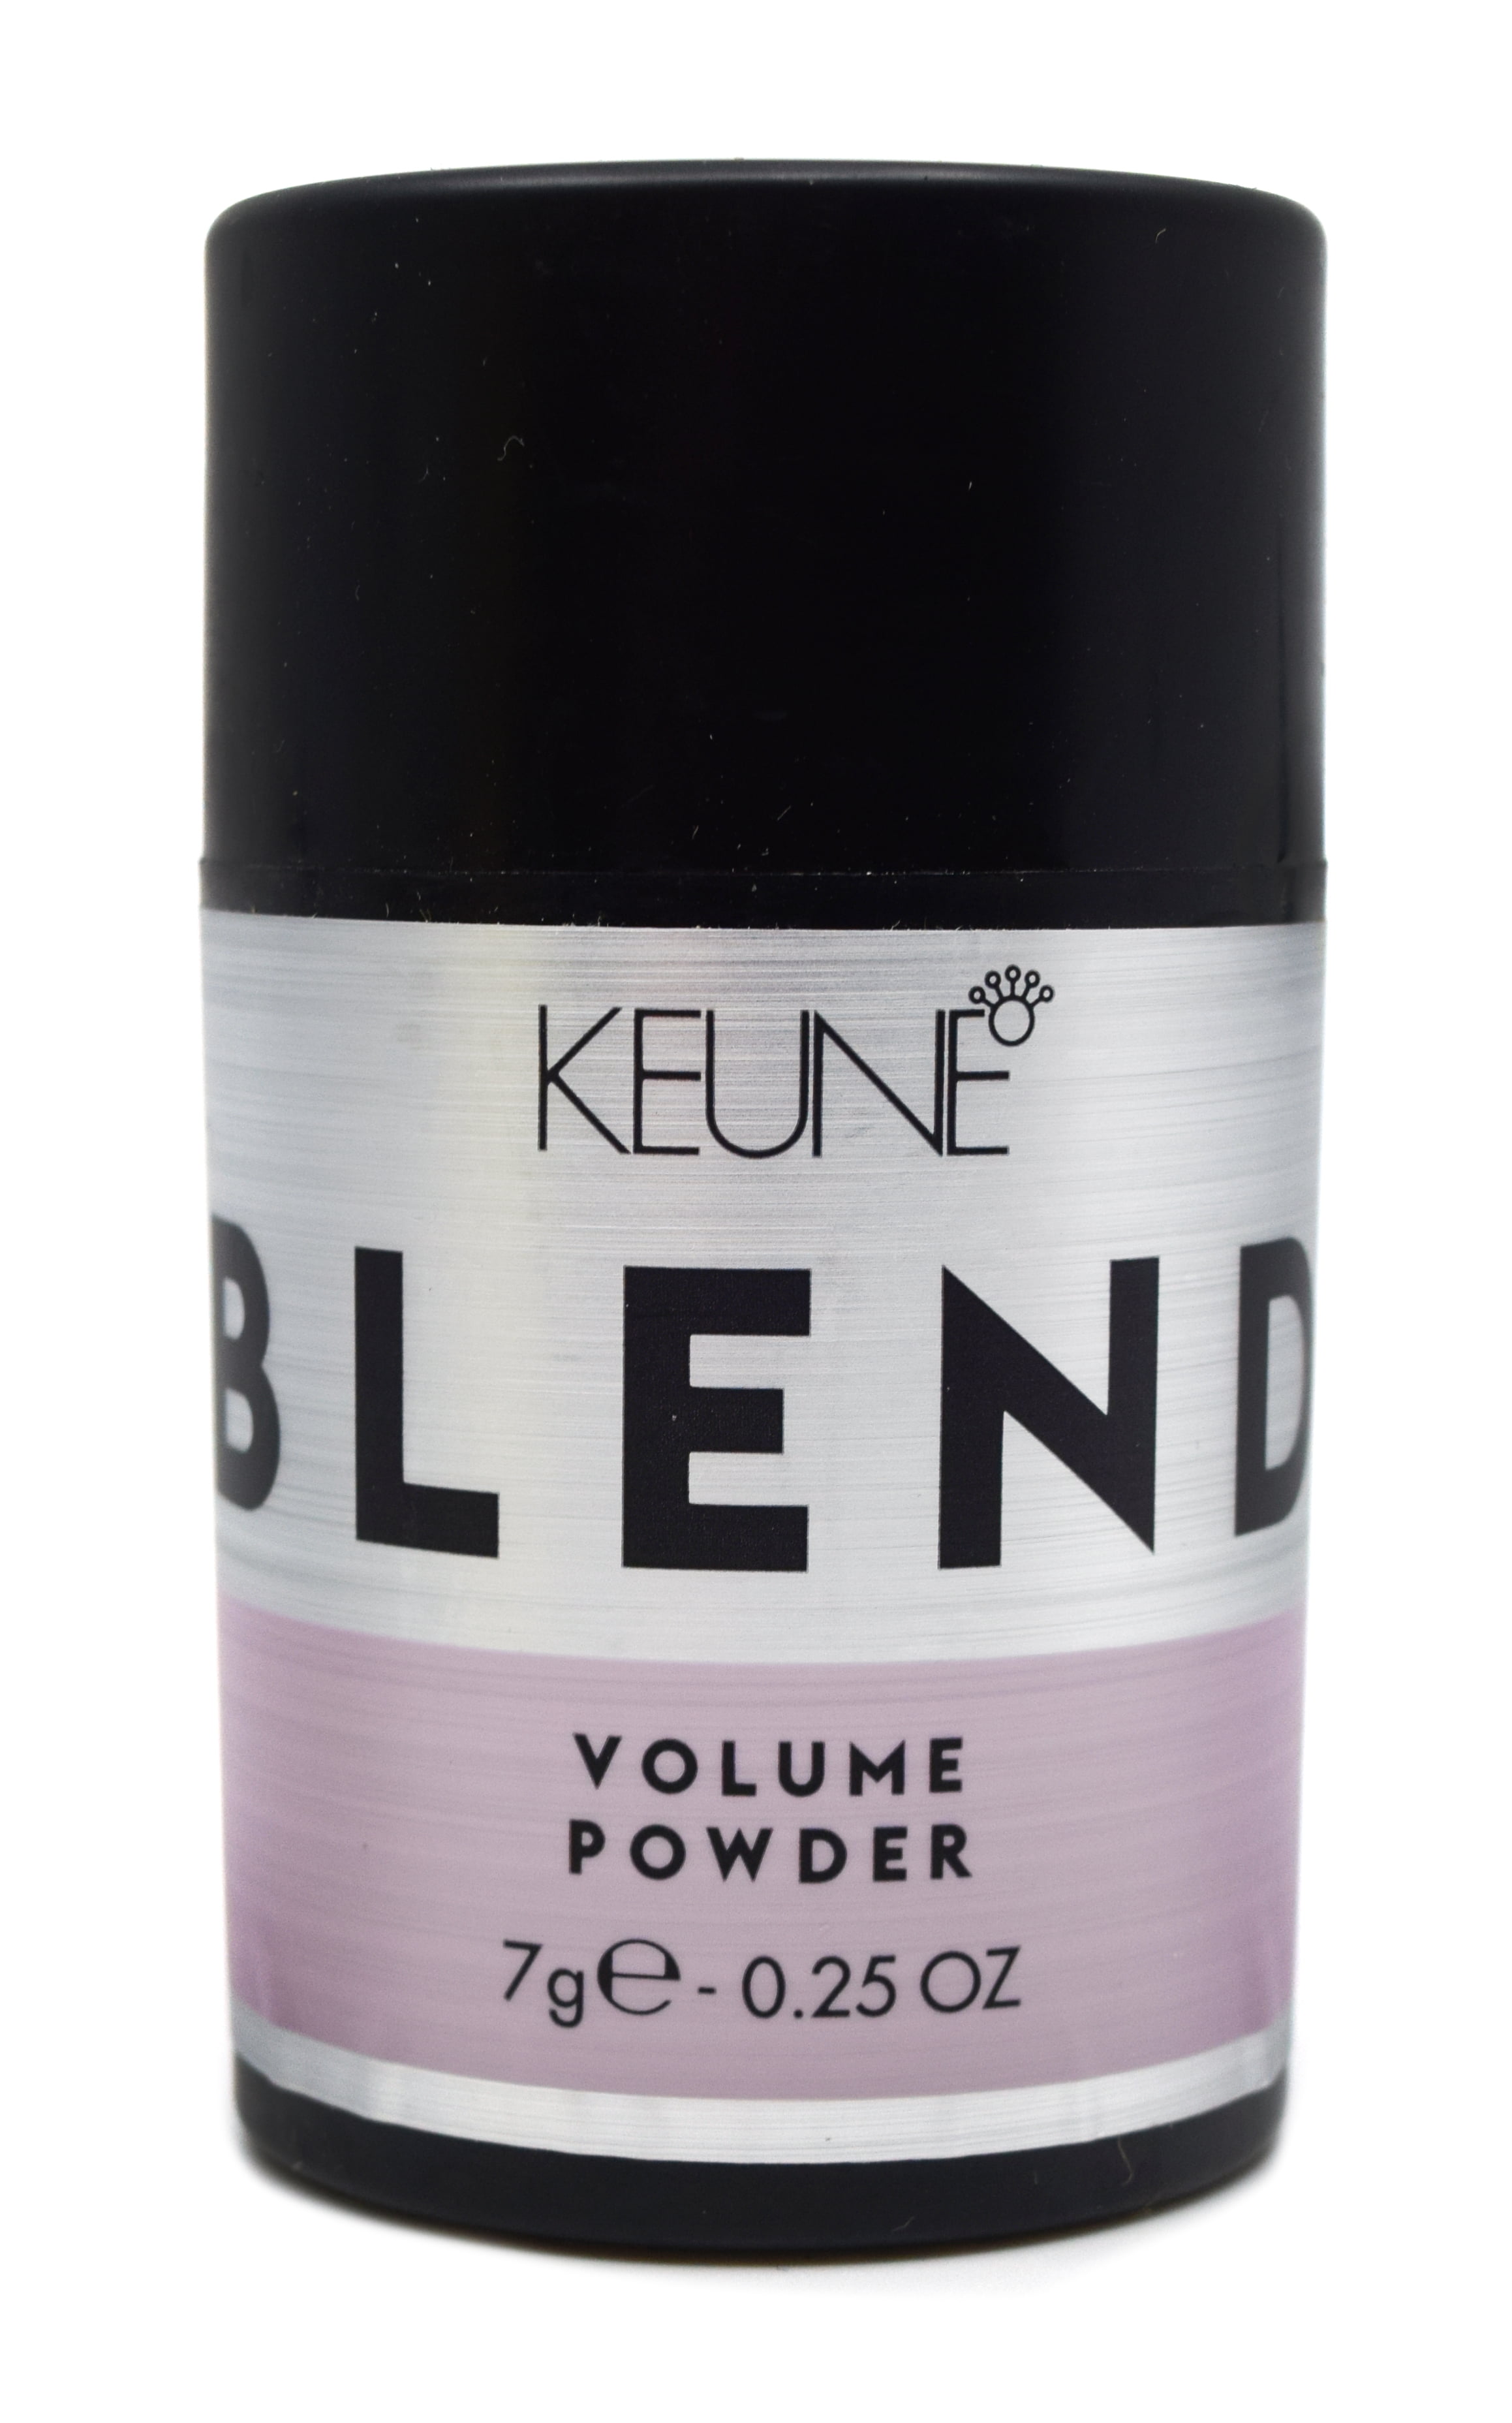 Keune - Keune Blend - Volume Powder, 0.25oz (7g) - Walmart.com ...